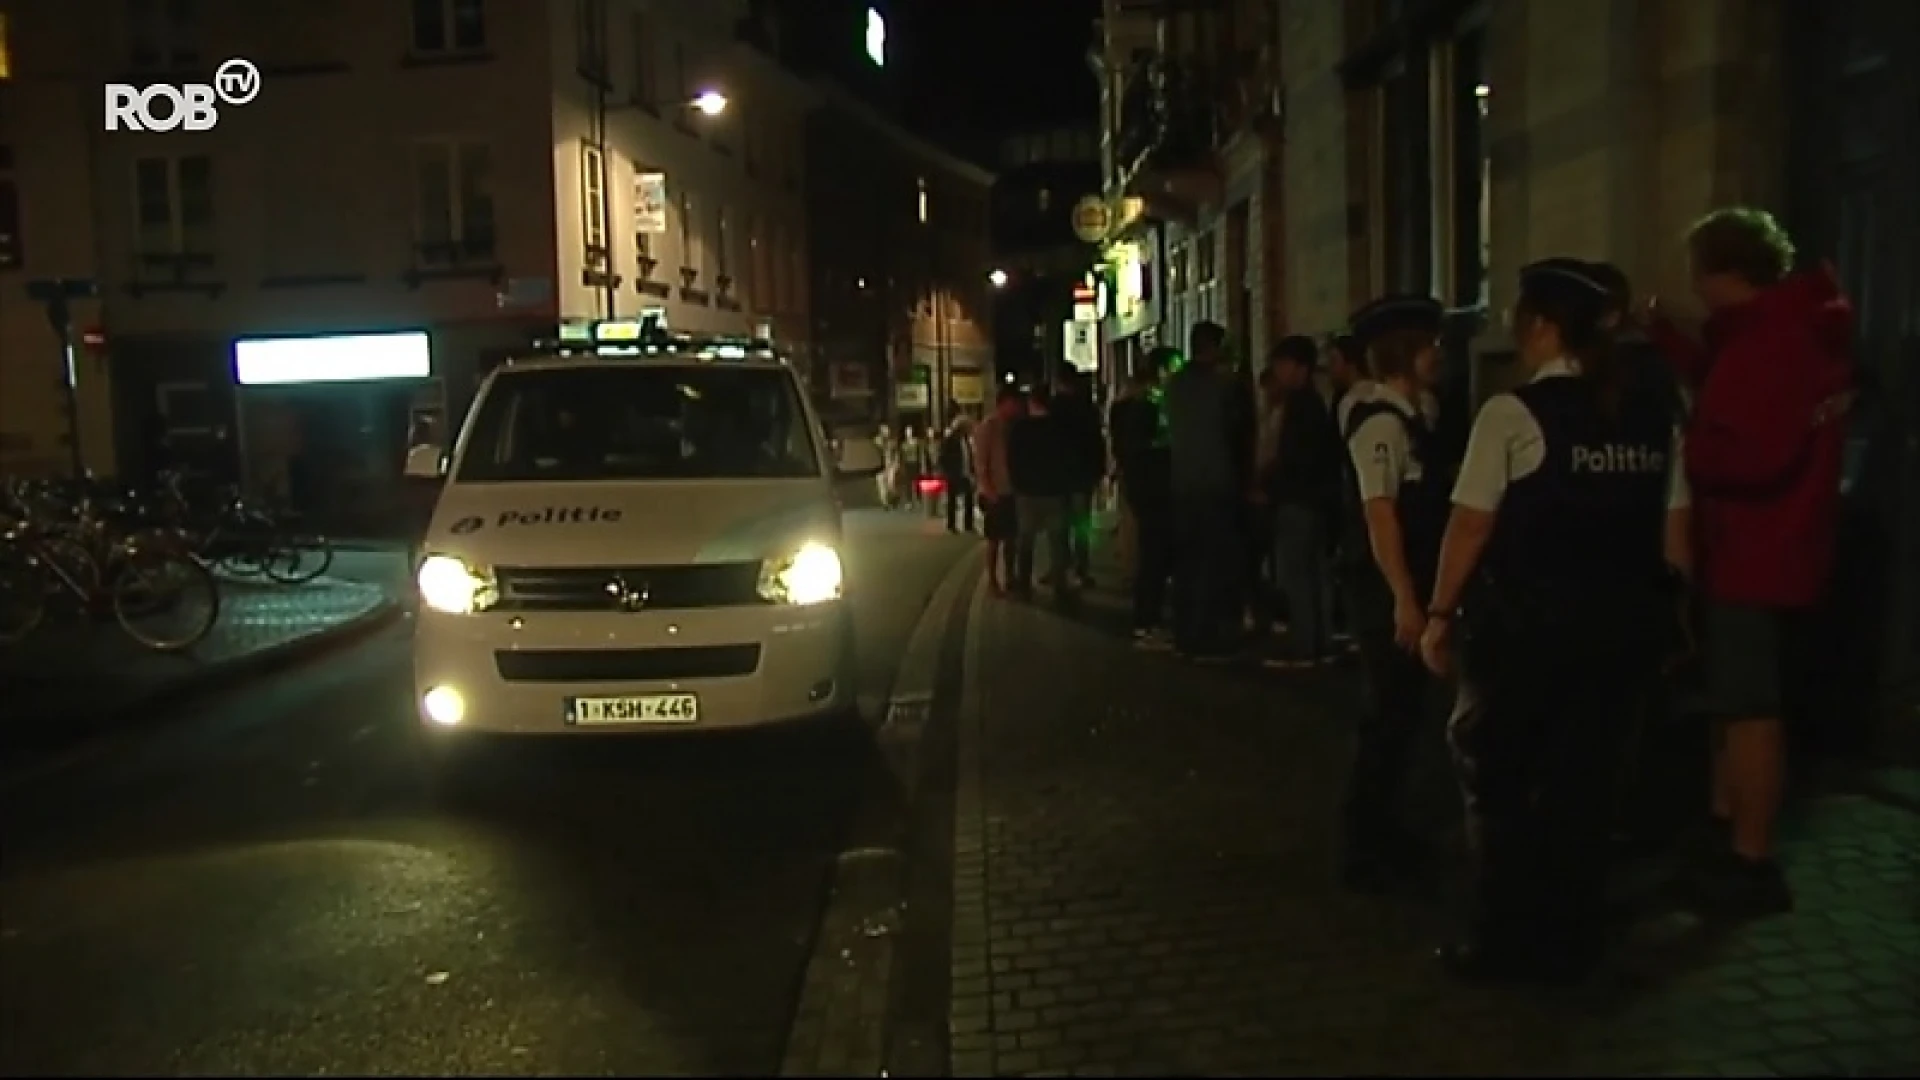 Agent politie Leuven 7 dagen werkonbekwaam na kopstoot corona-overtreder